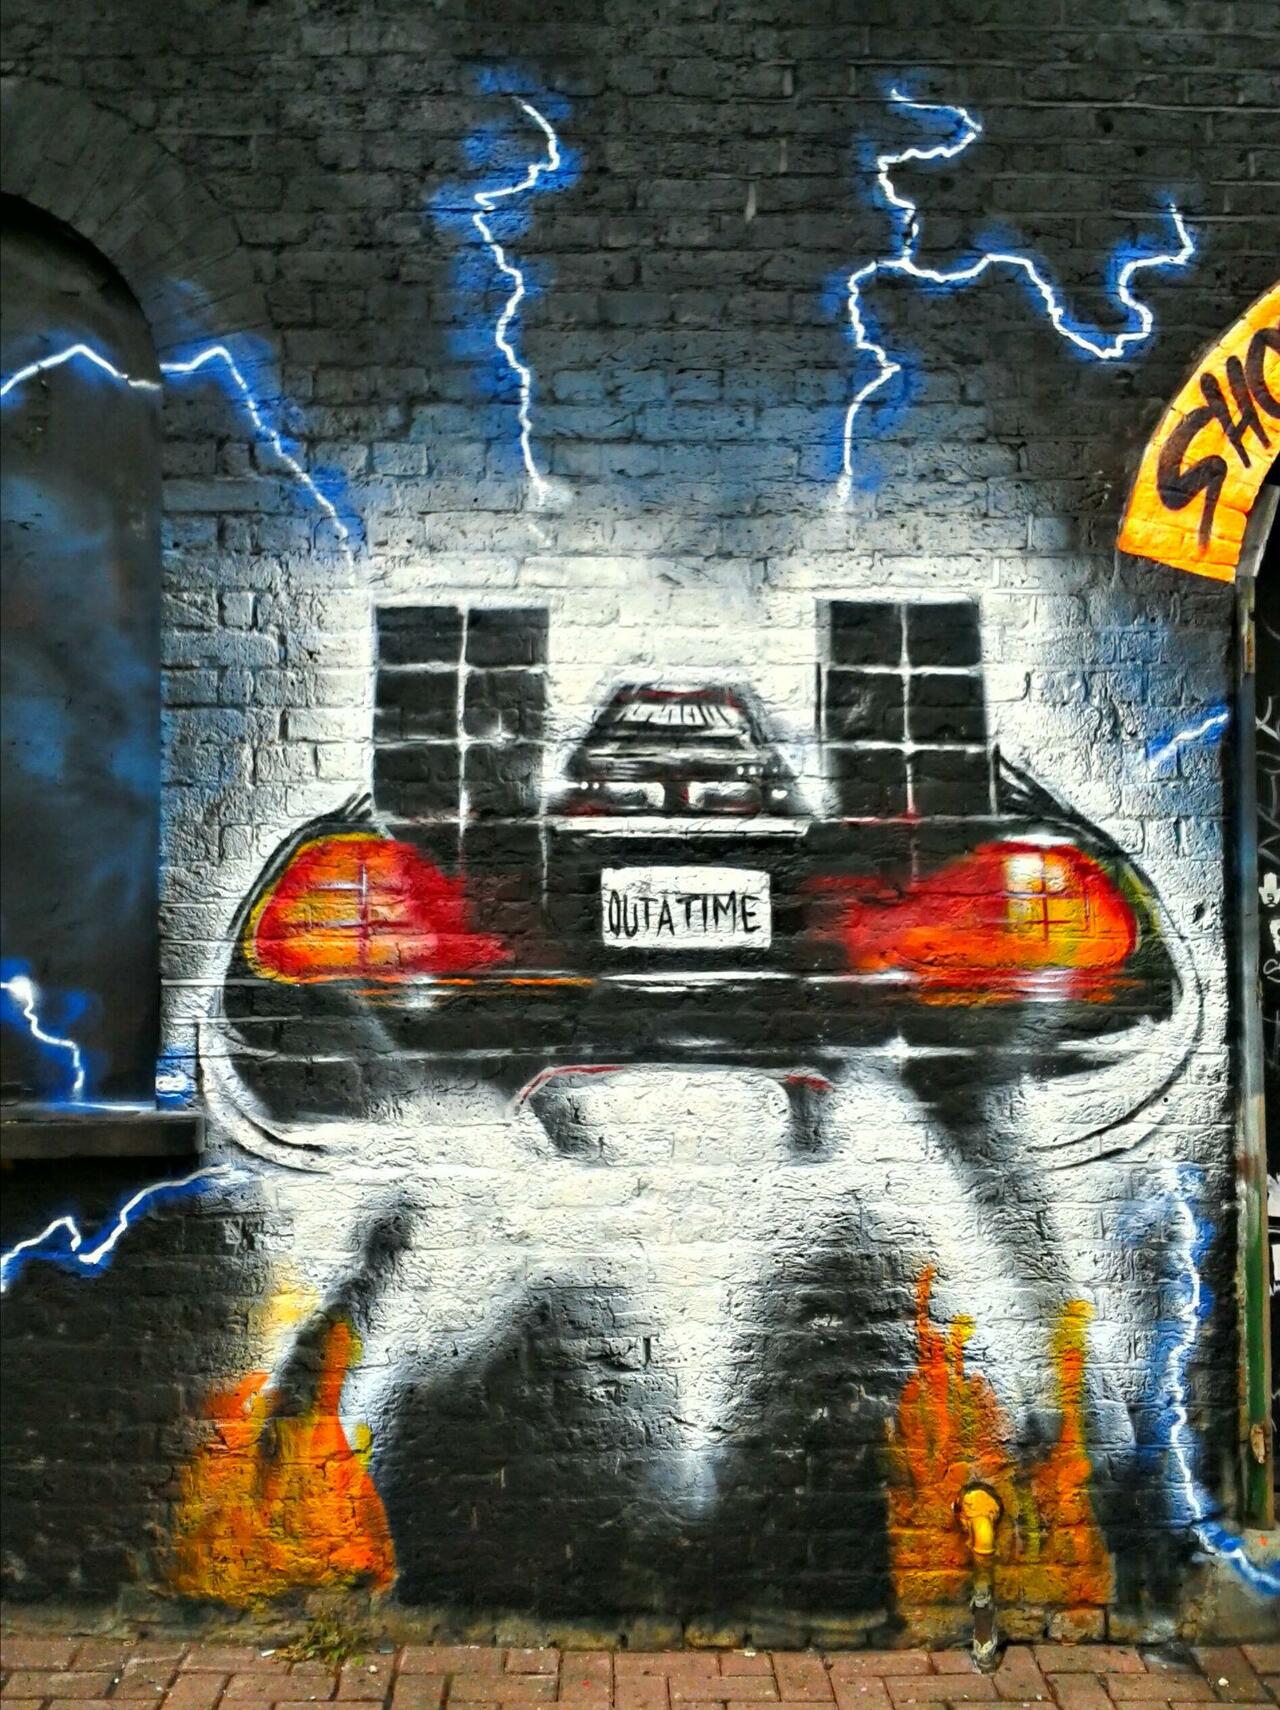 #Celebrating the 30th #anniversary of #BackToTheFuture, #graffiti in #shoreditch #London #BackToFutureDay #streetart https://t.co/1ouOx8fbZk